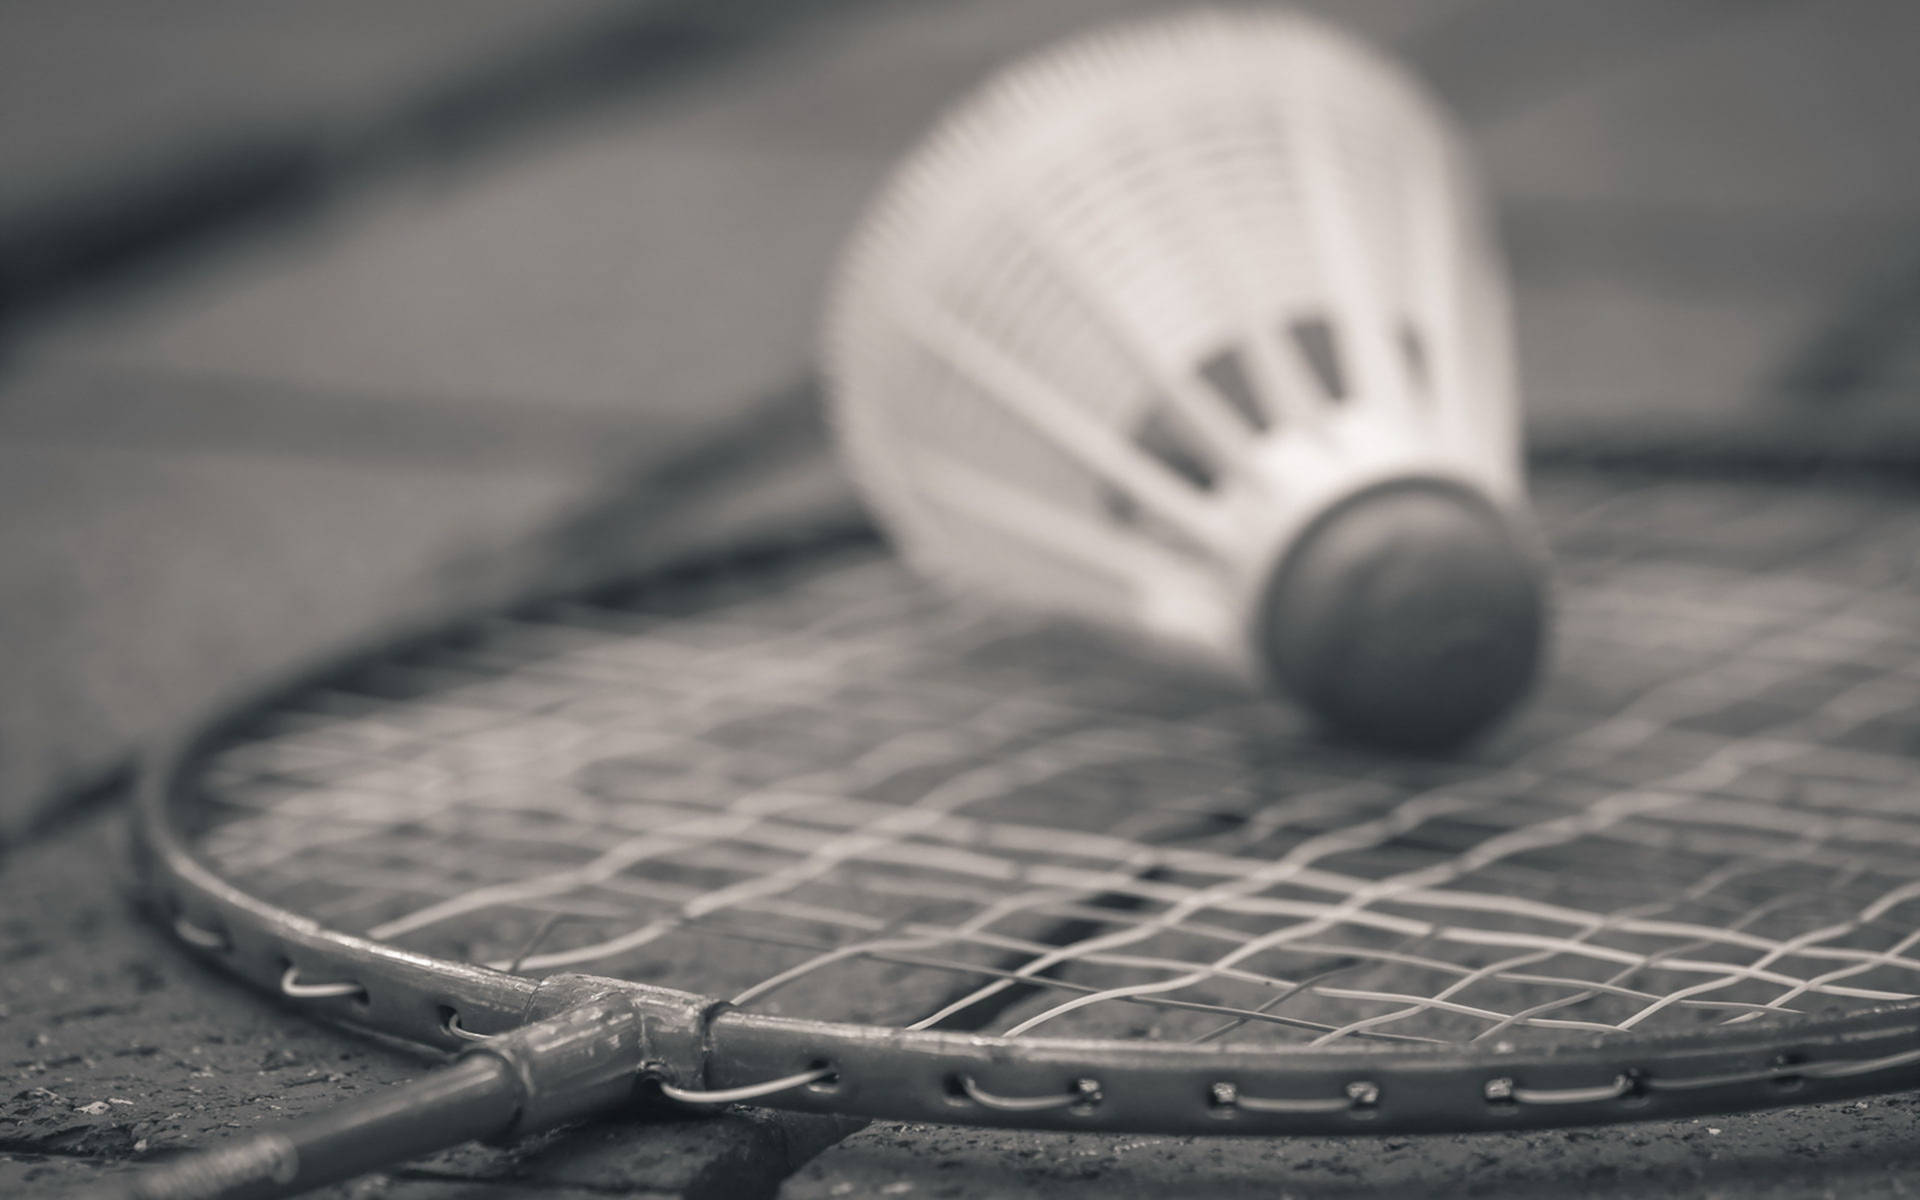 Badminton Racket In Grayscale Background